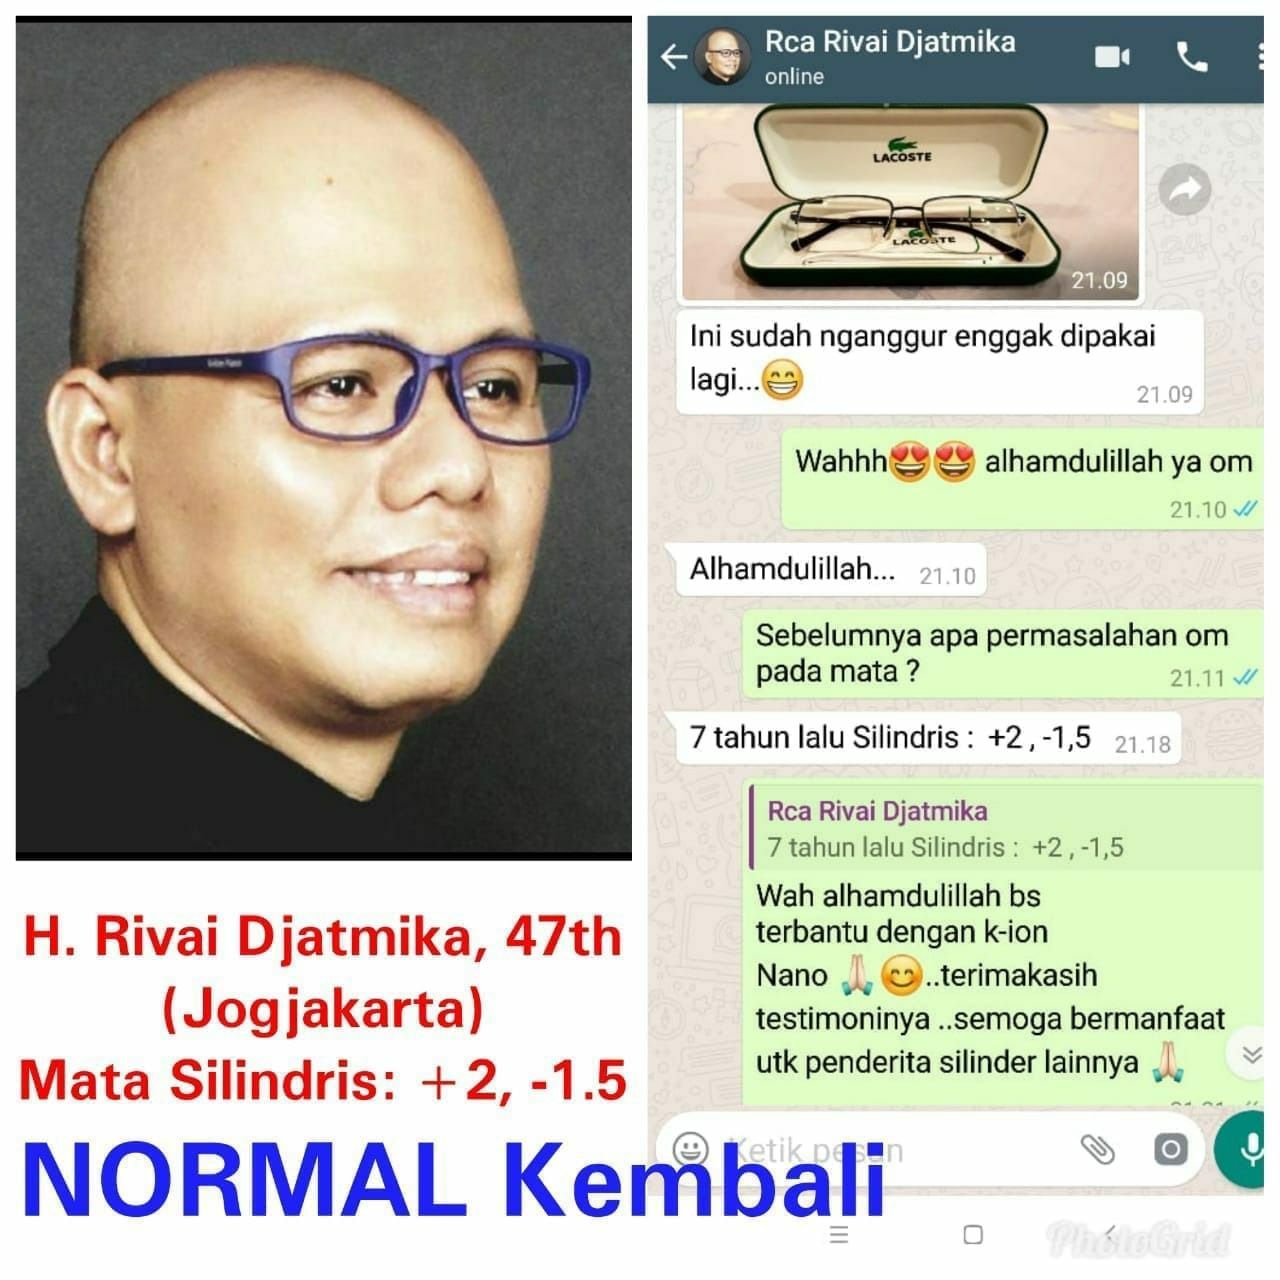  Kacamata  Kesehatan K Ion  Nano Rahayu id